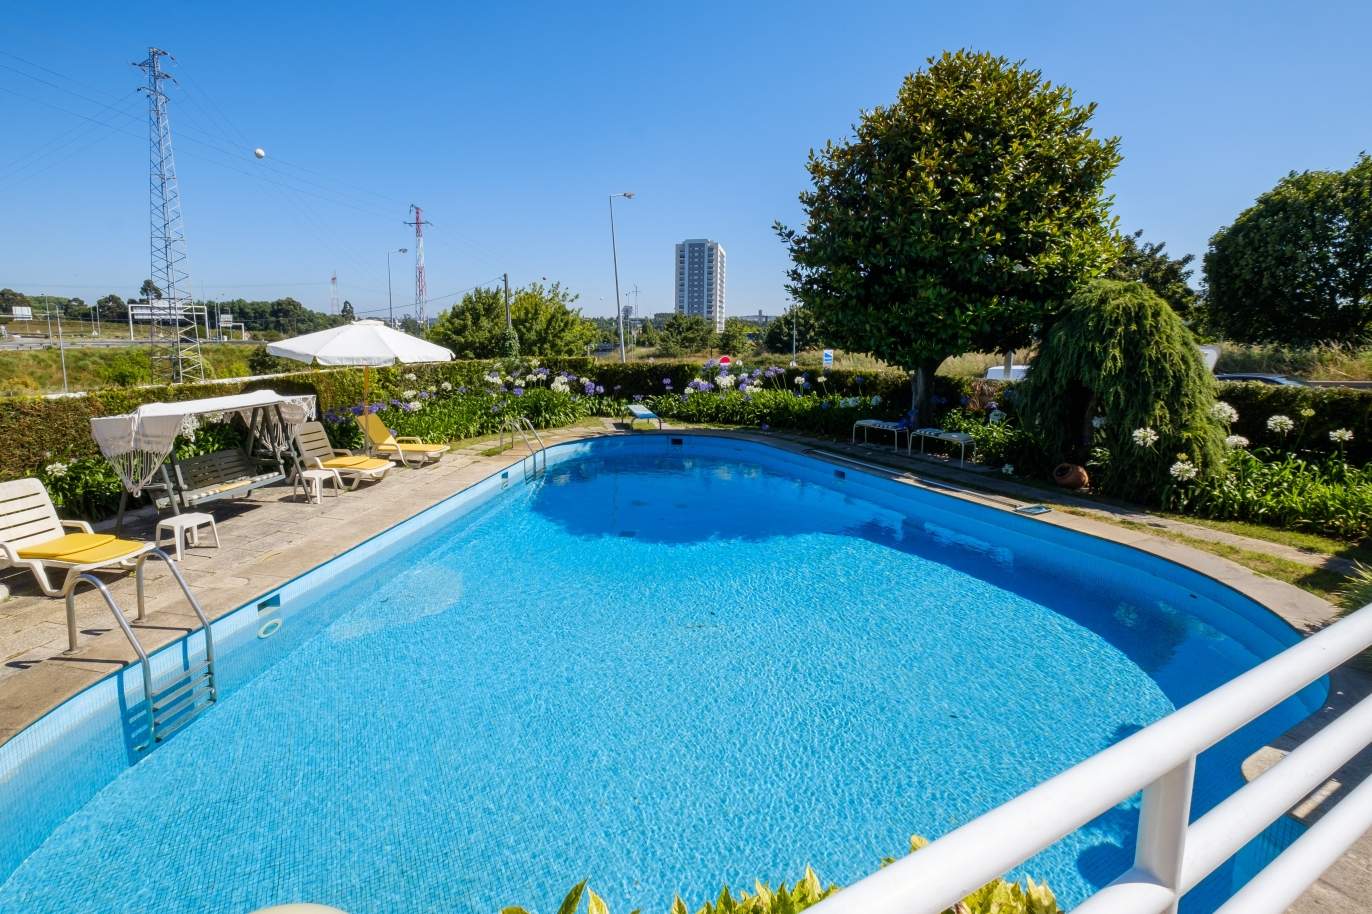 Sale of villa with pool and terrace, Maia, Porto, Portugal_142173